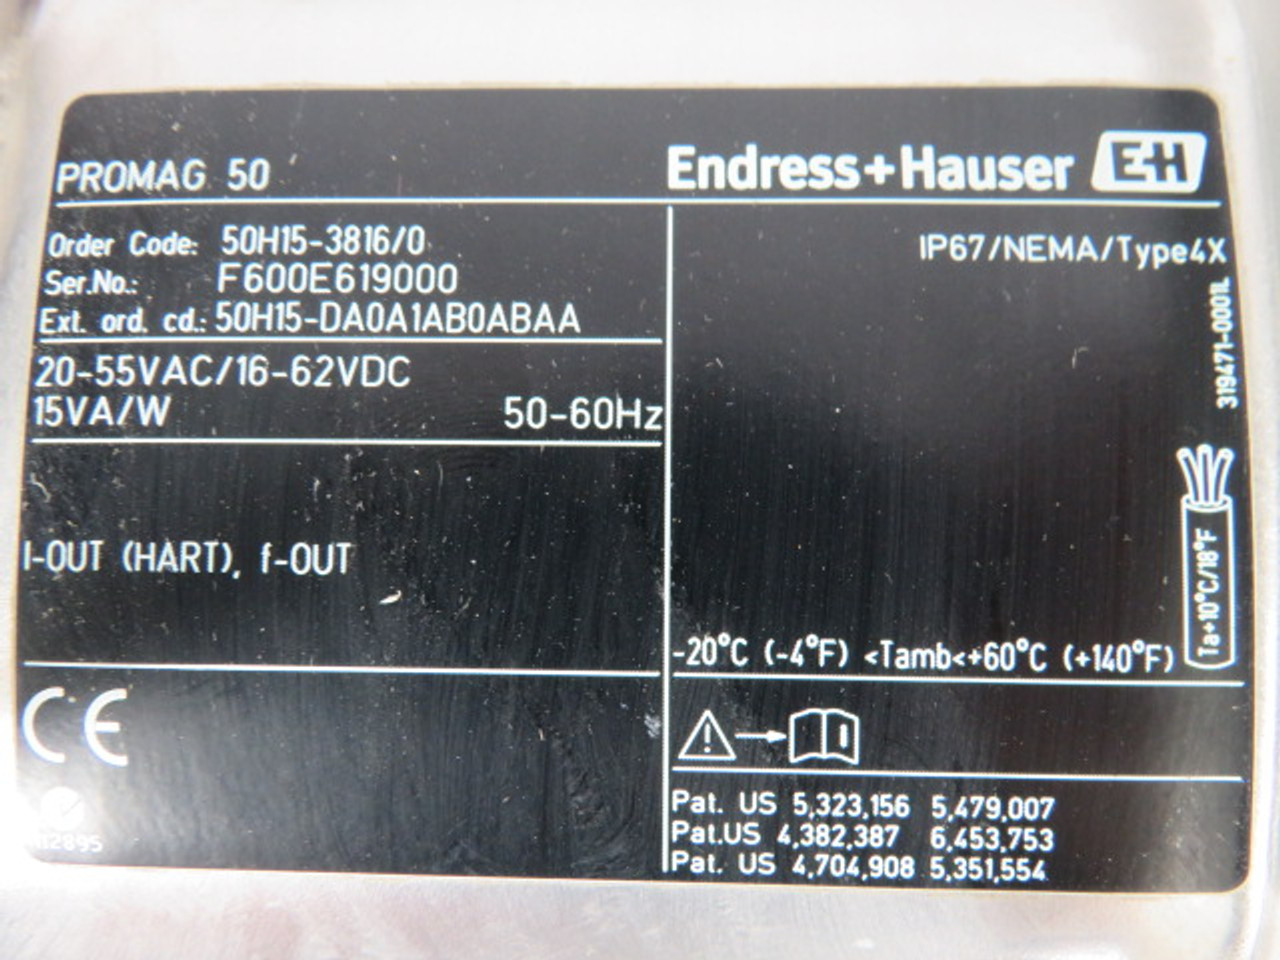 Endress+Hauser 50H15-3816/0 Electromagnetic Flow Meter 20-55VAC/16-62VDC USED